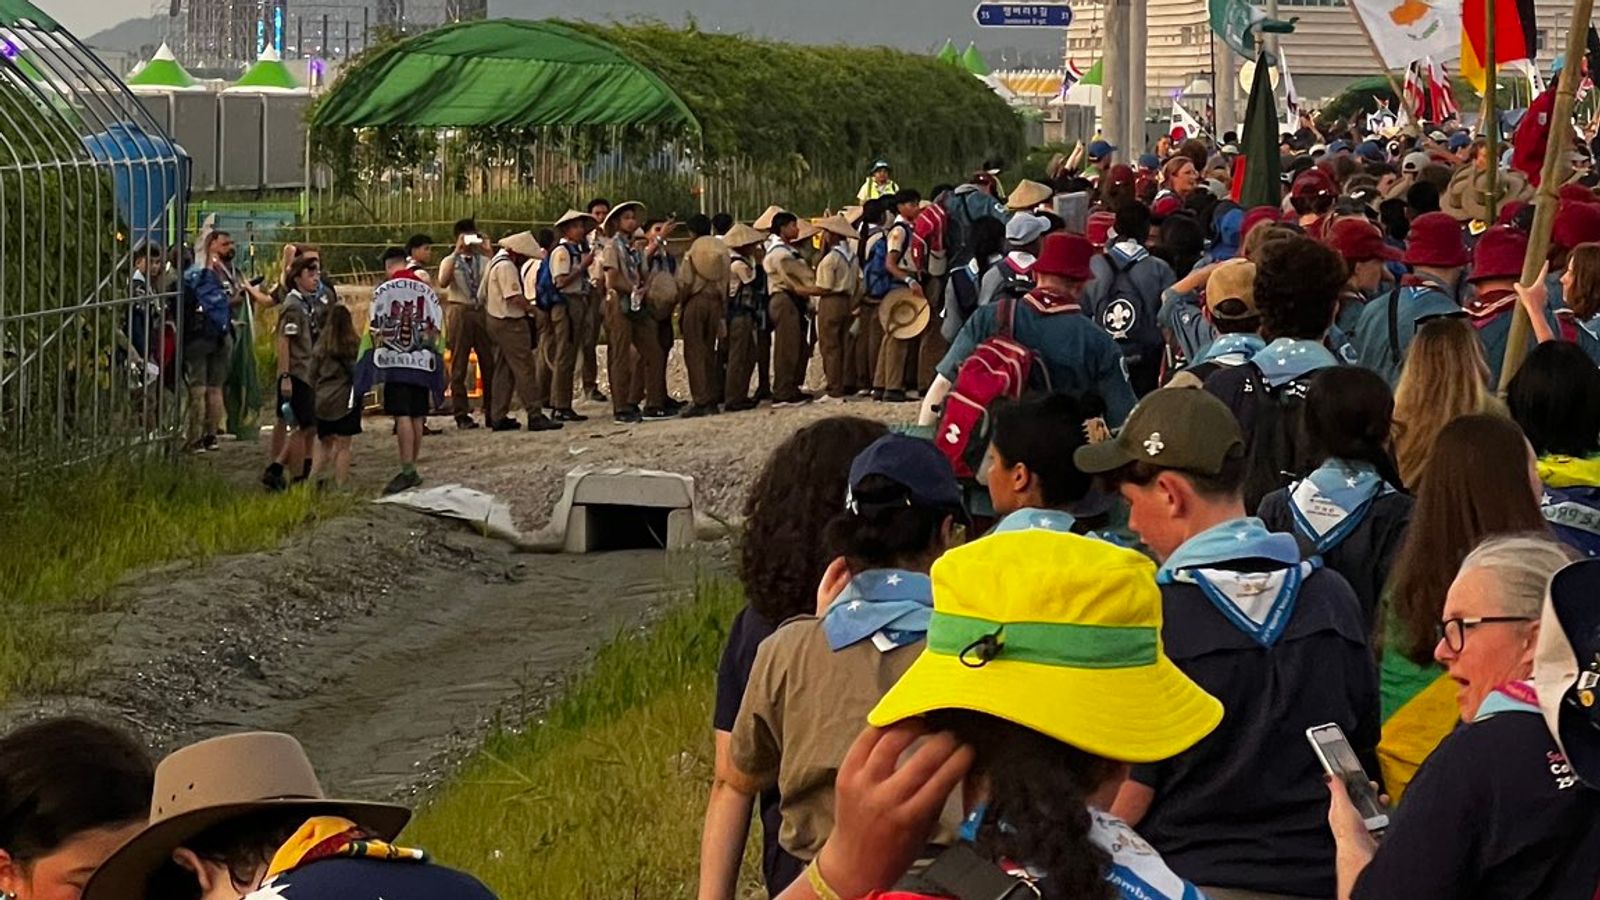 UK Scout leader reveals Jamboree chaos amid South Korea heatwave - with 'ambulances everywhere'